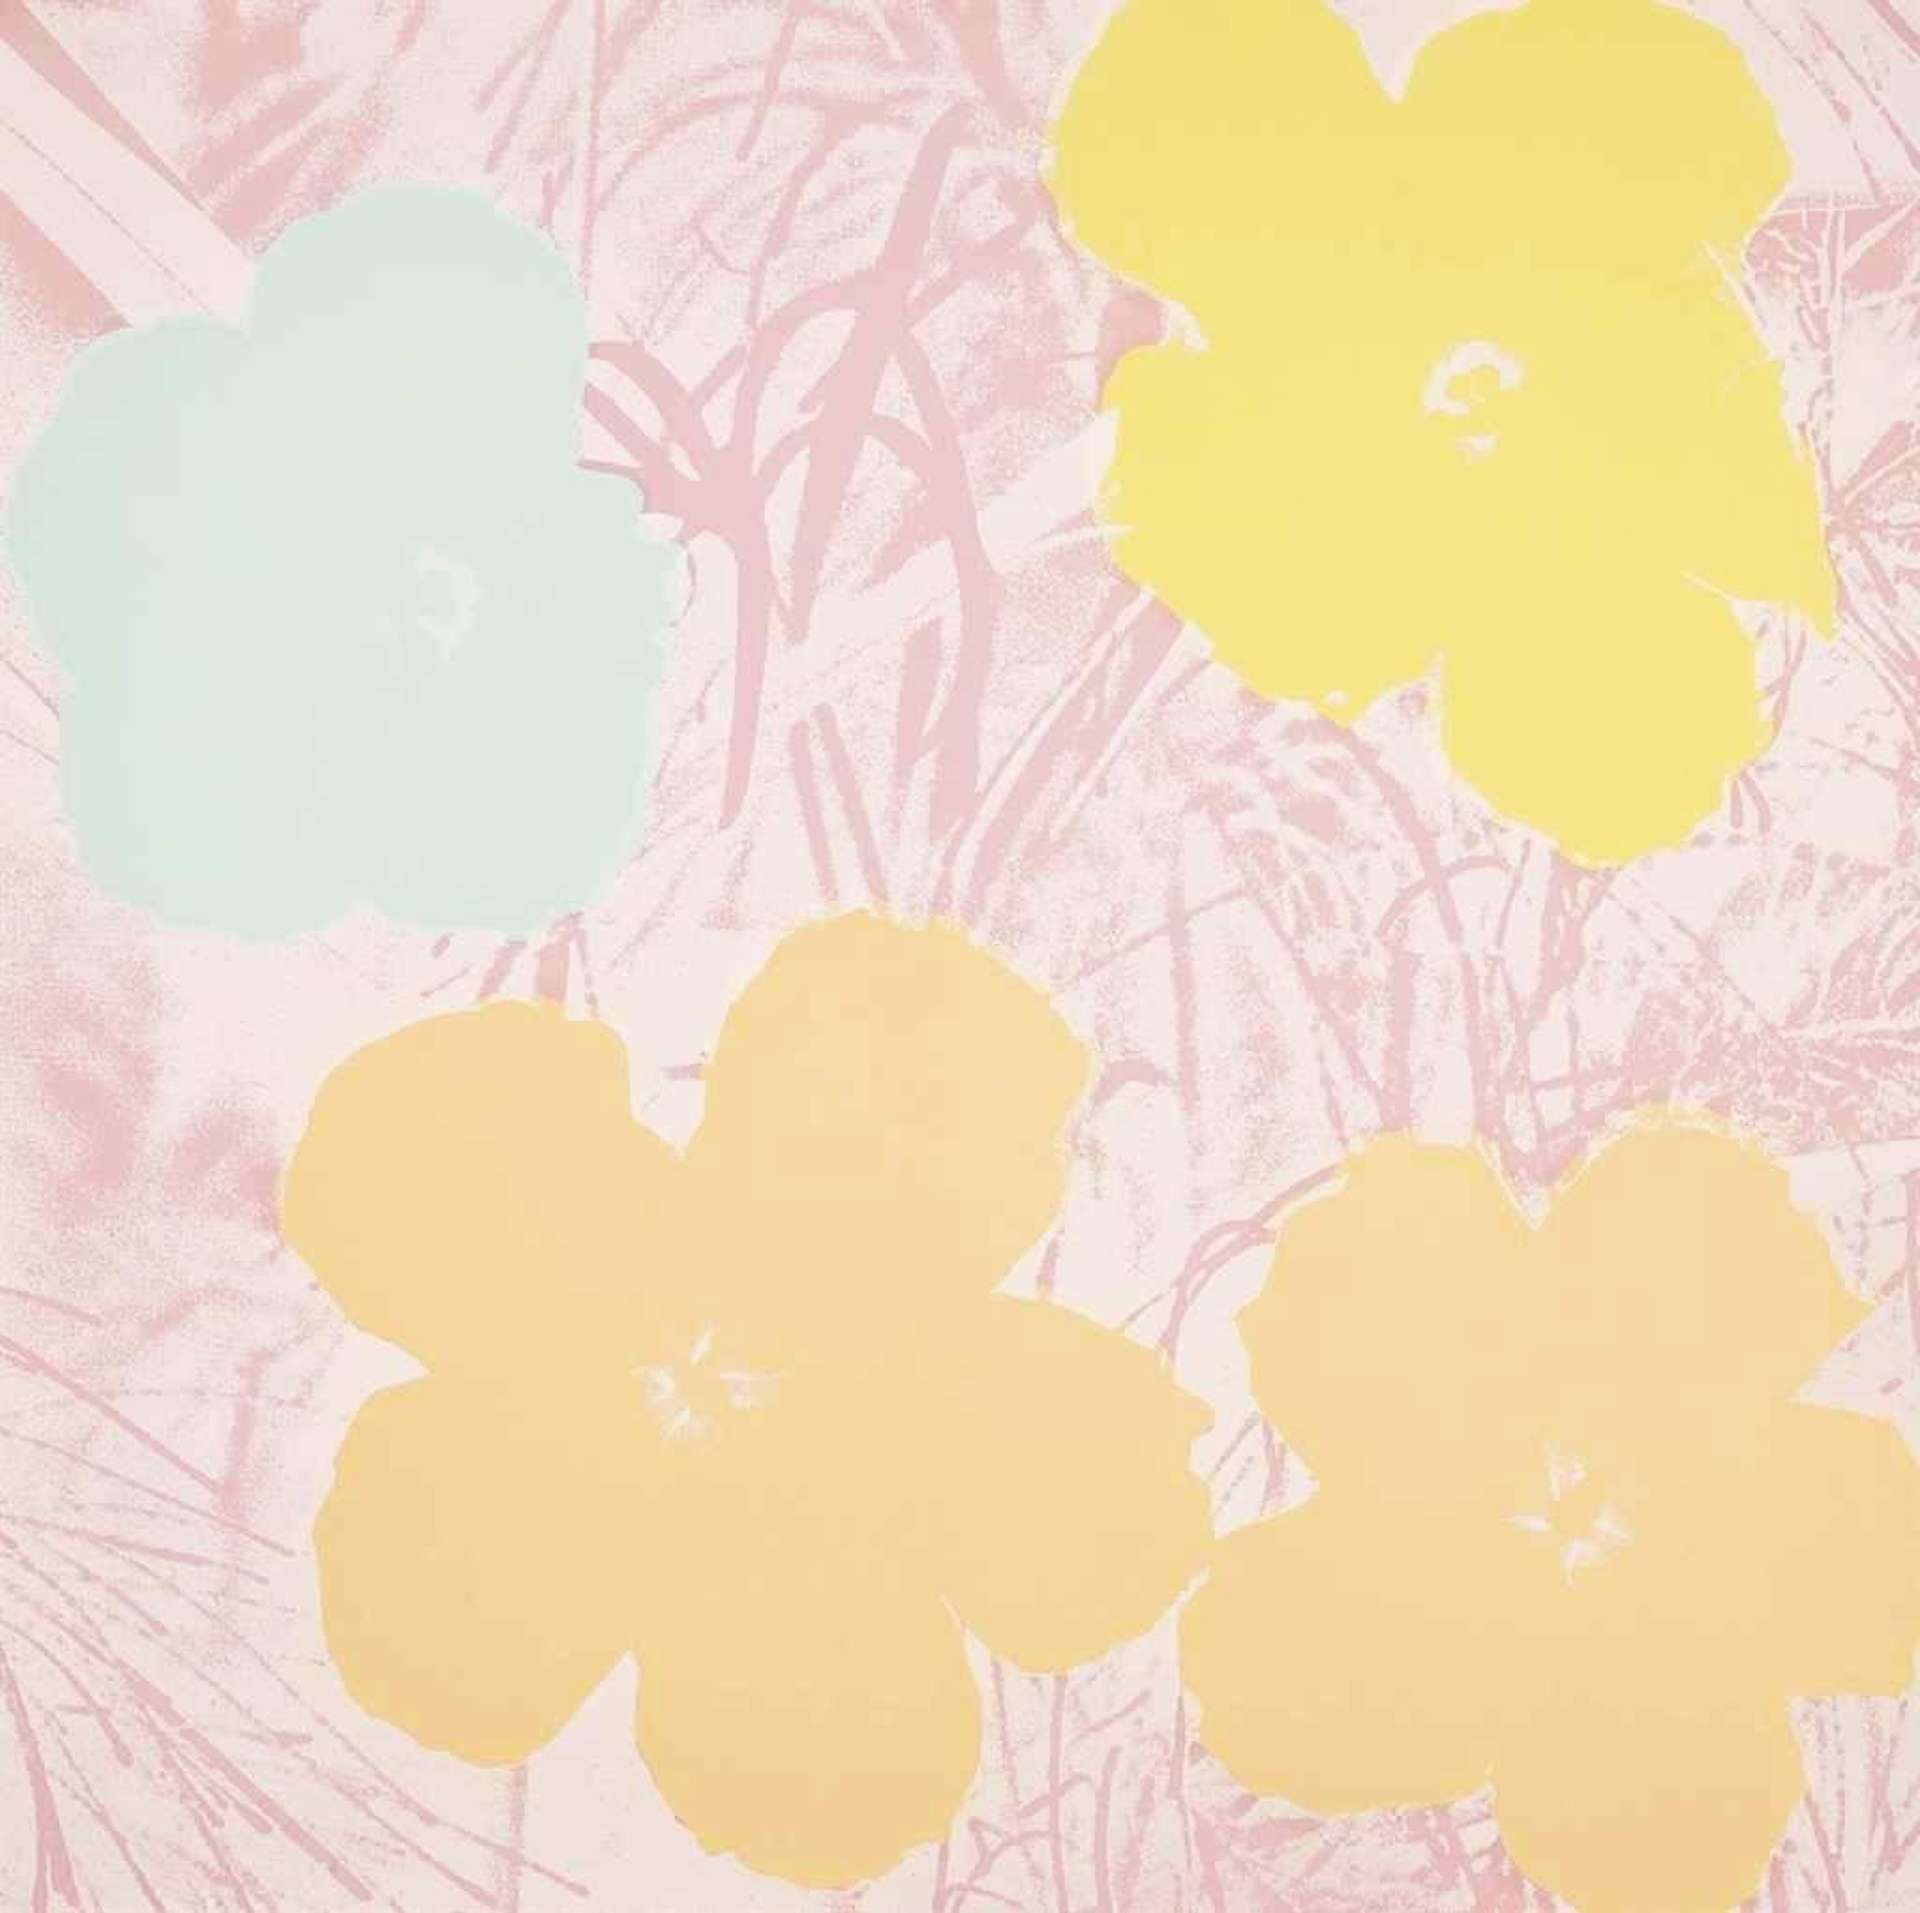 Andy Warhol: Flowers (F. & S. II.70) - Signed Print